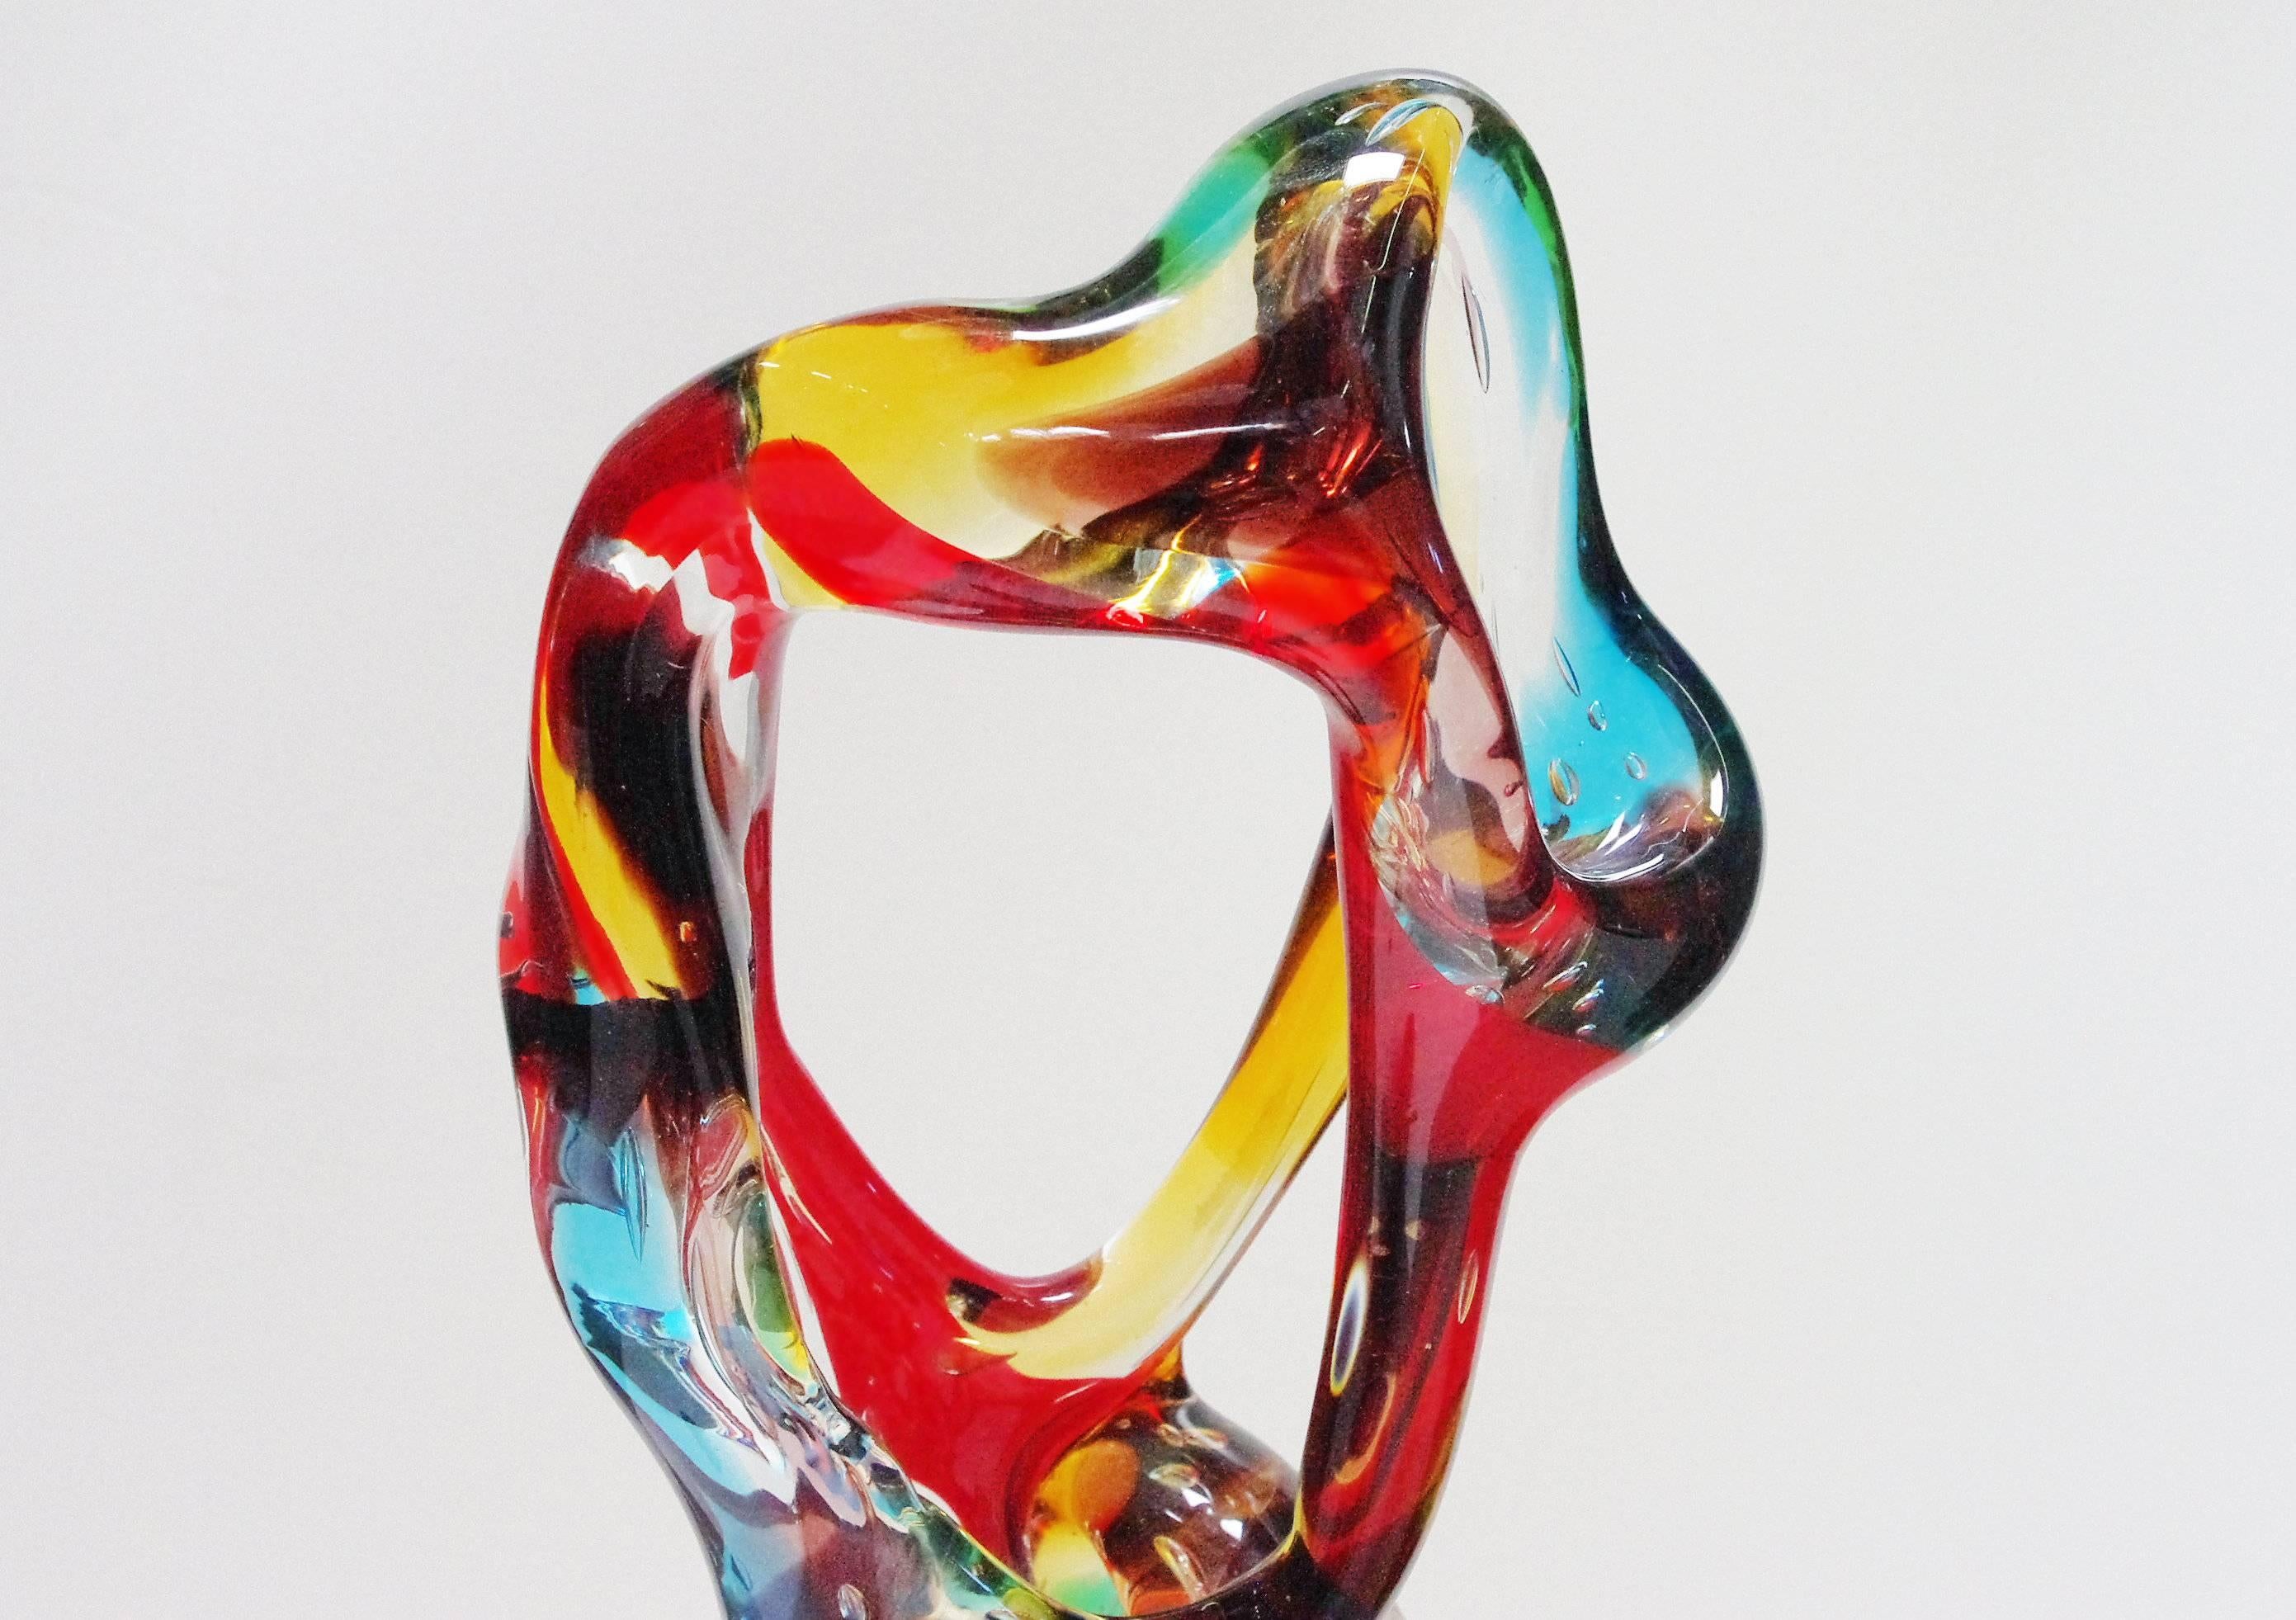 Italian multicolored Murano glass abstract sculpture hand blown by Sergio Constantini, signed 